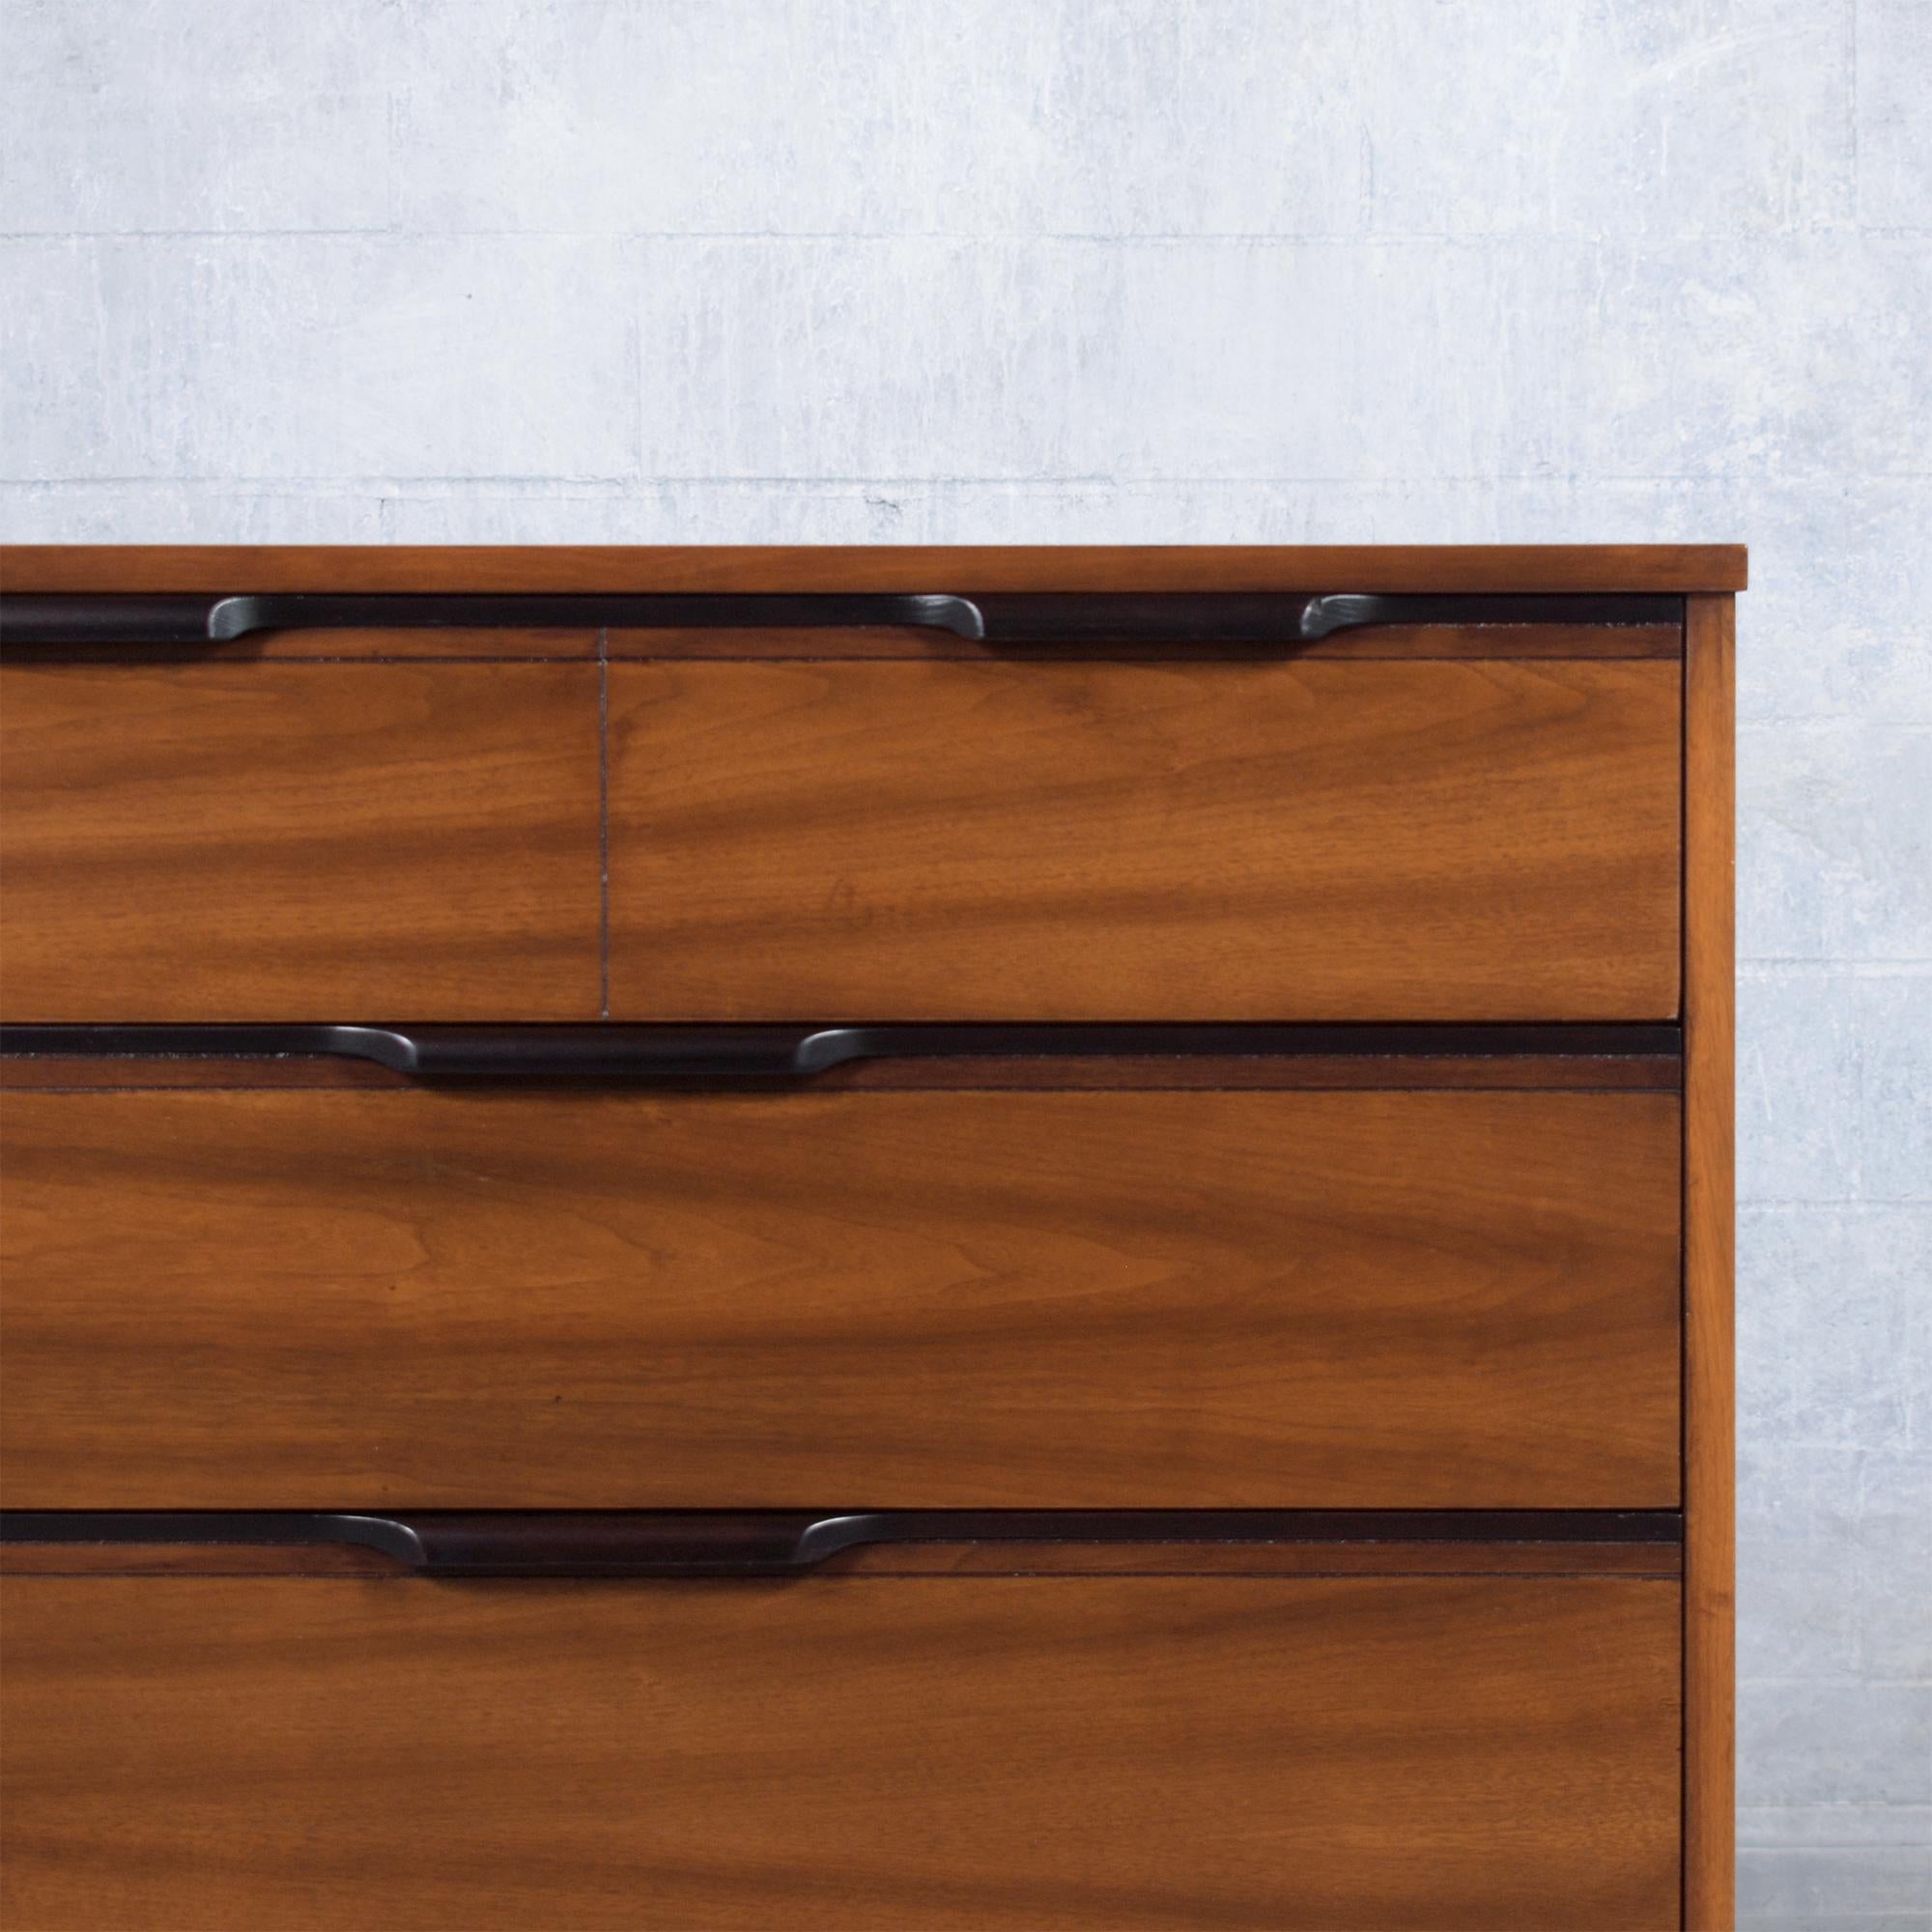 Modern Walnut Dresser Restored: Two-Tone Elegance & Craftsmanship In Good Condition For Sale In Los Angeles, CA